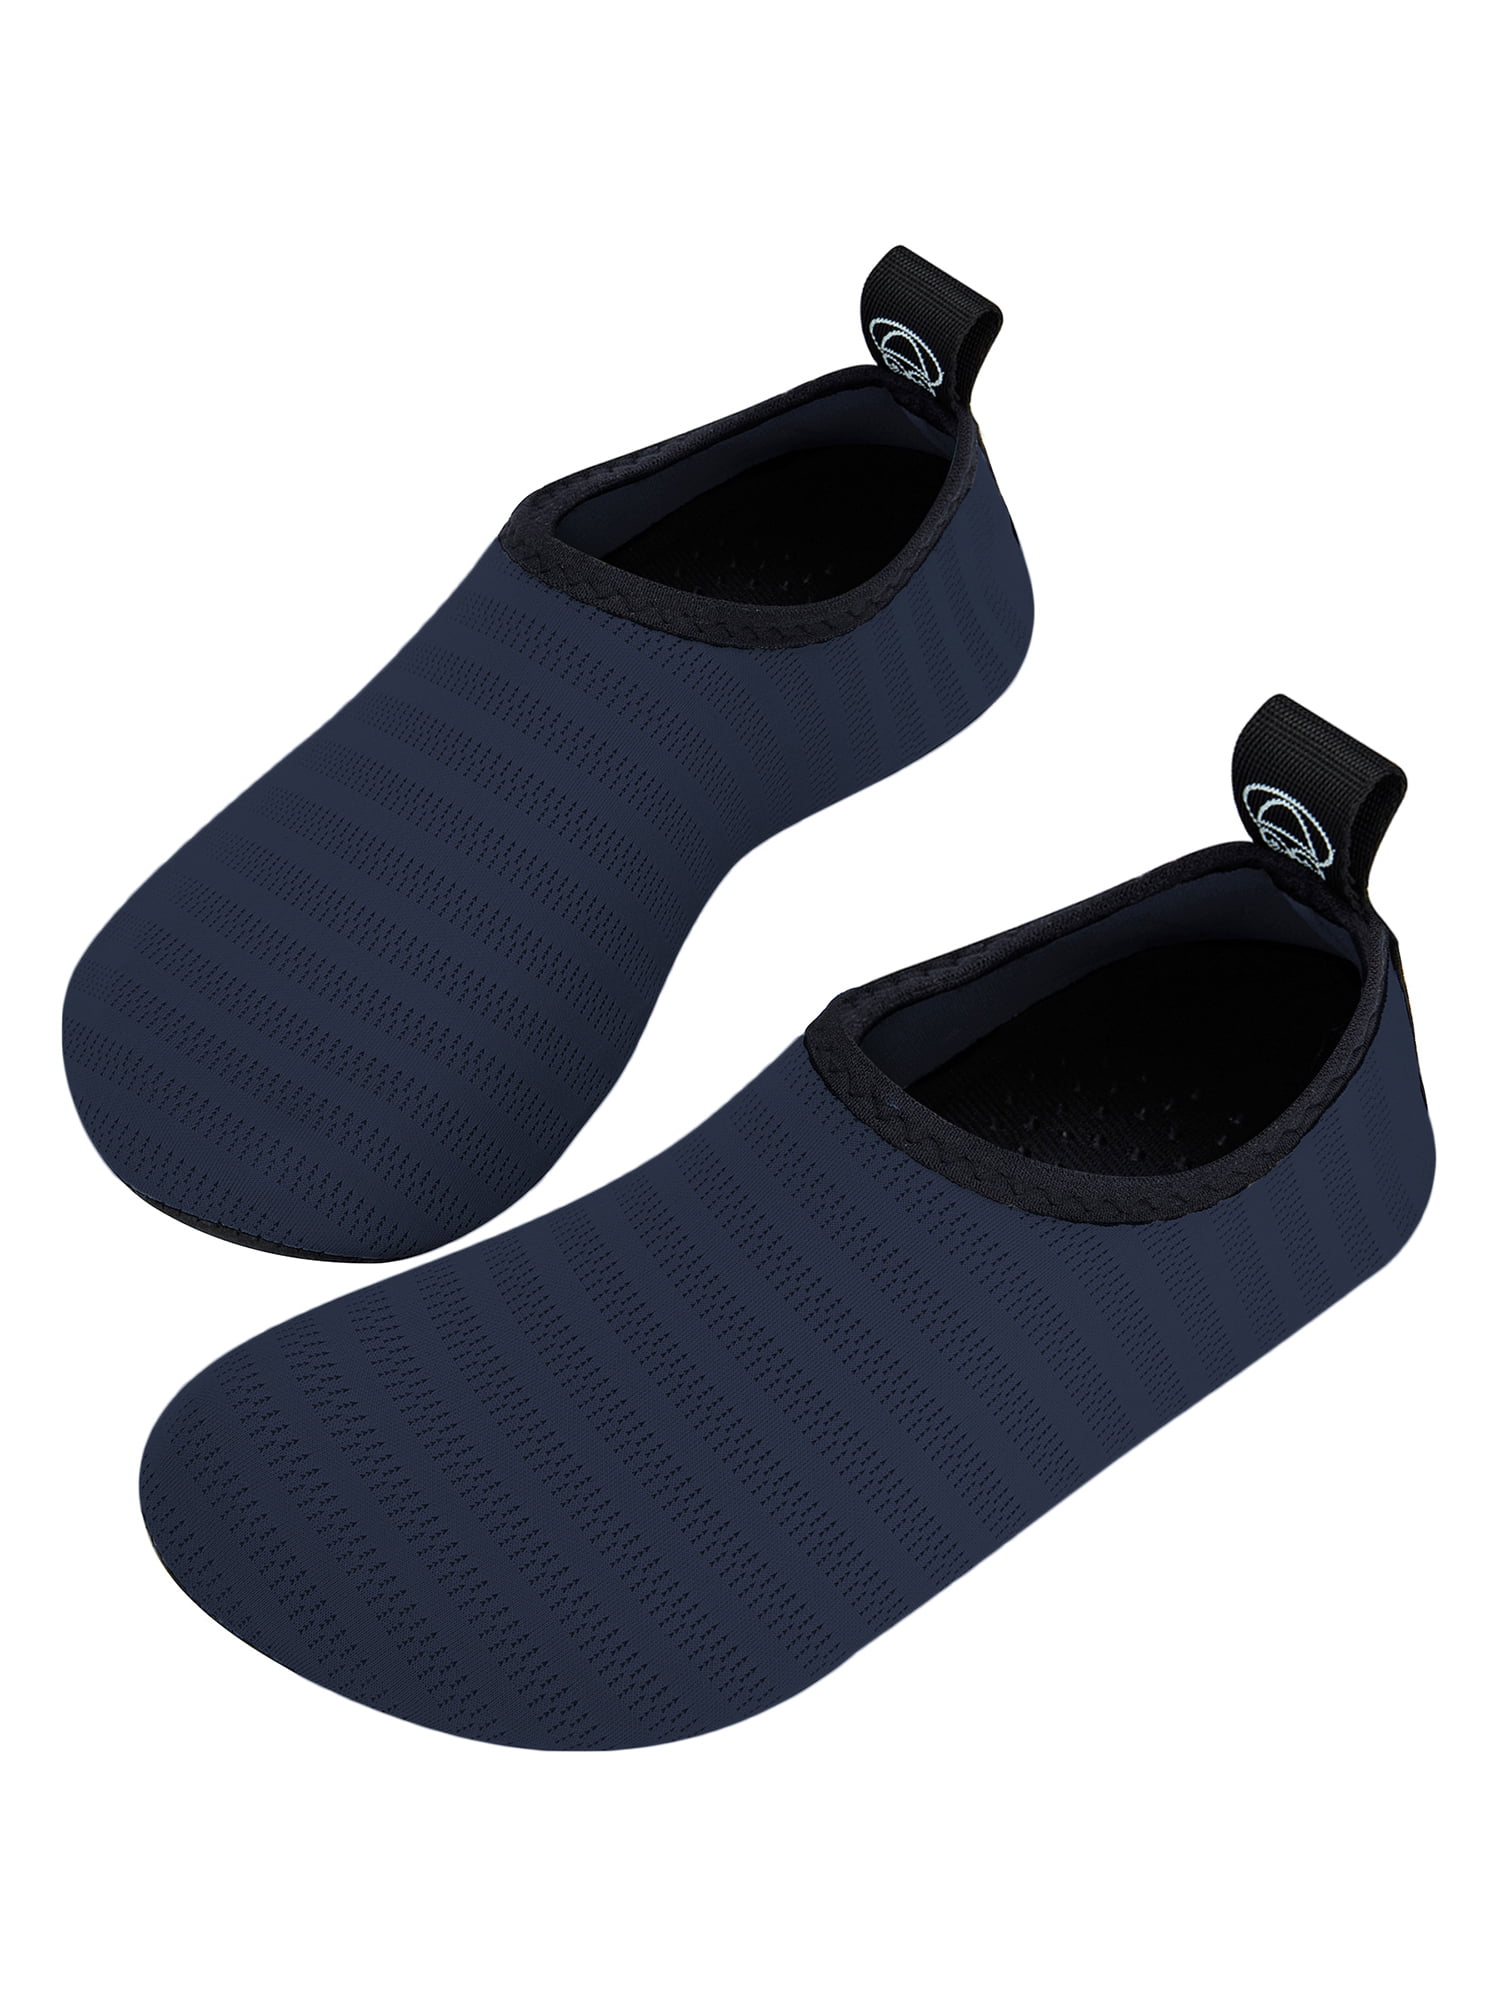 Barefoot Quick-Dry Aqua Water Socks Slip-on Swim Beach Shoes for Snorkeling Surfing Kayaking Beach Walking Yoga JOTO Water Shoes for Women Men Kids 